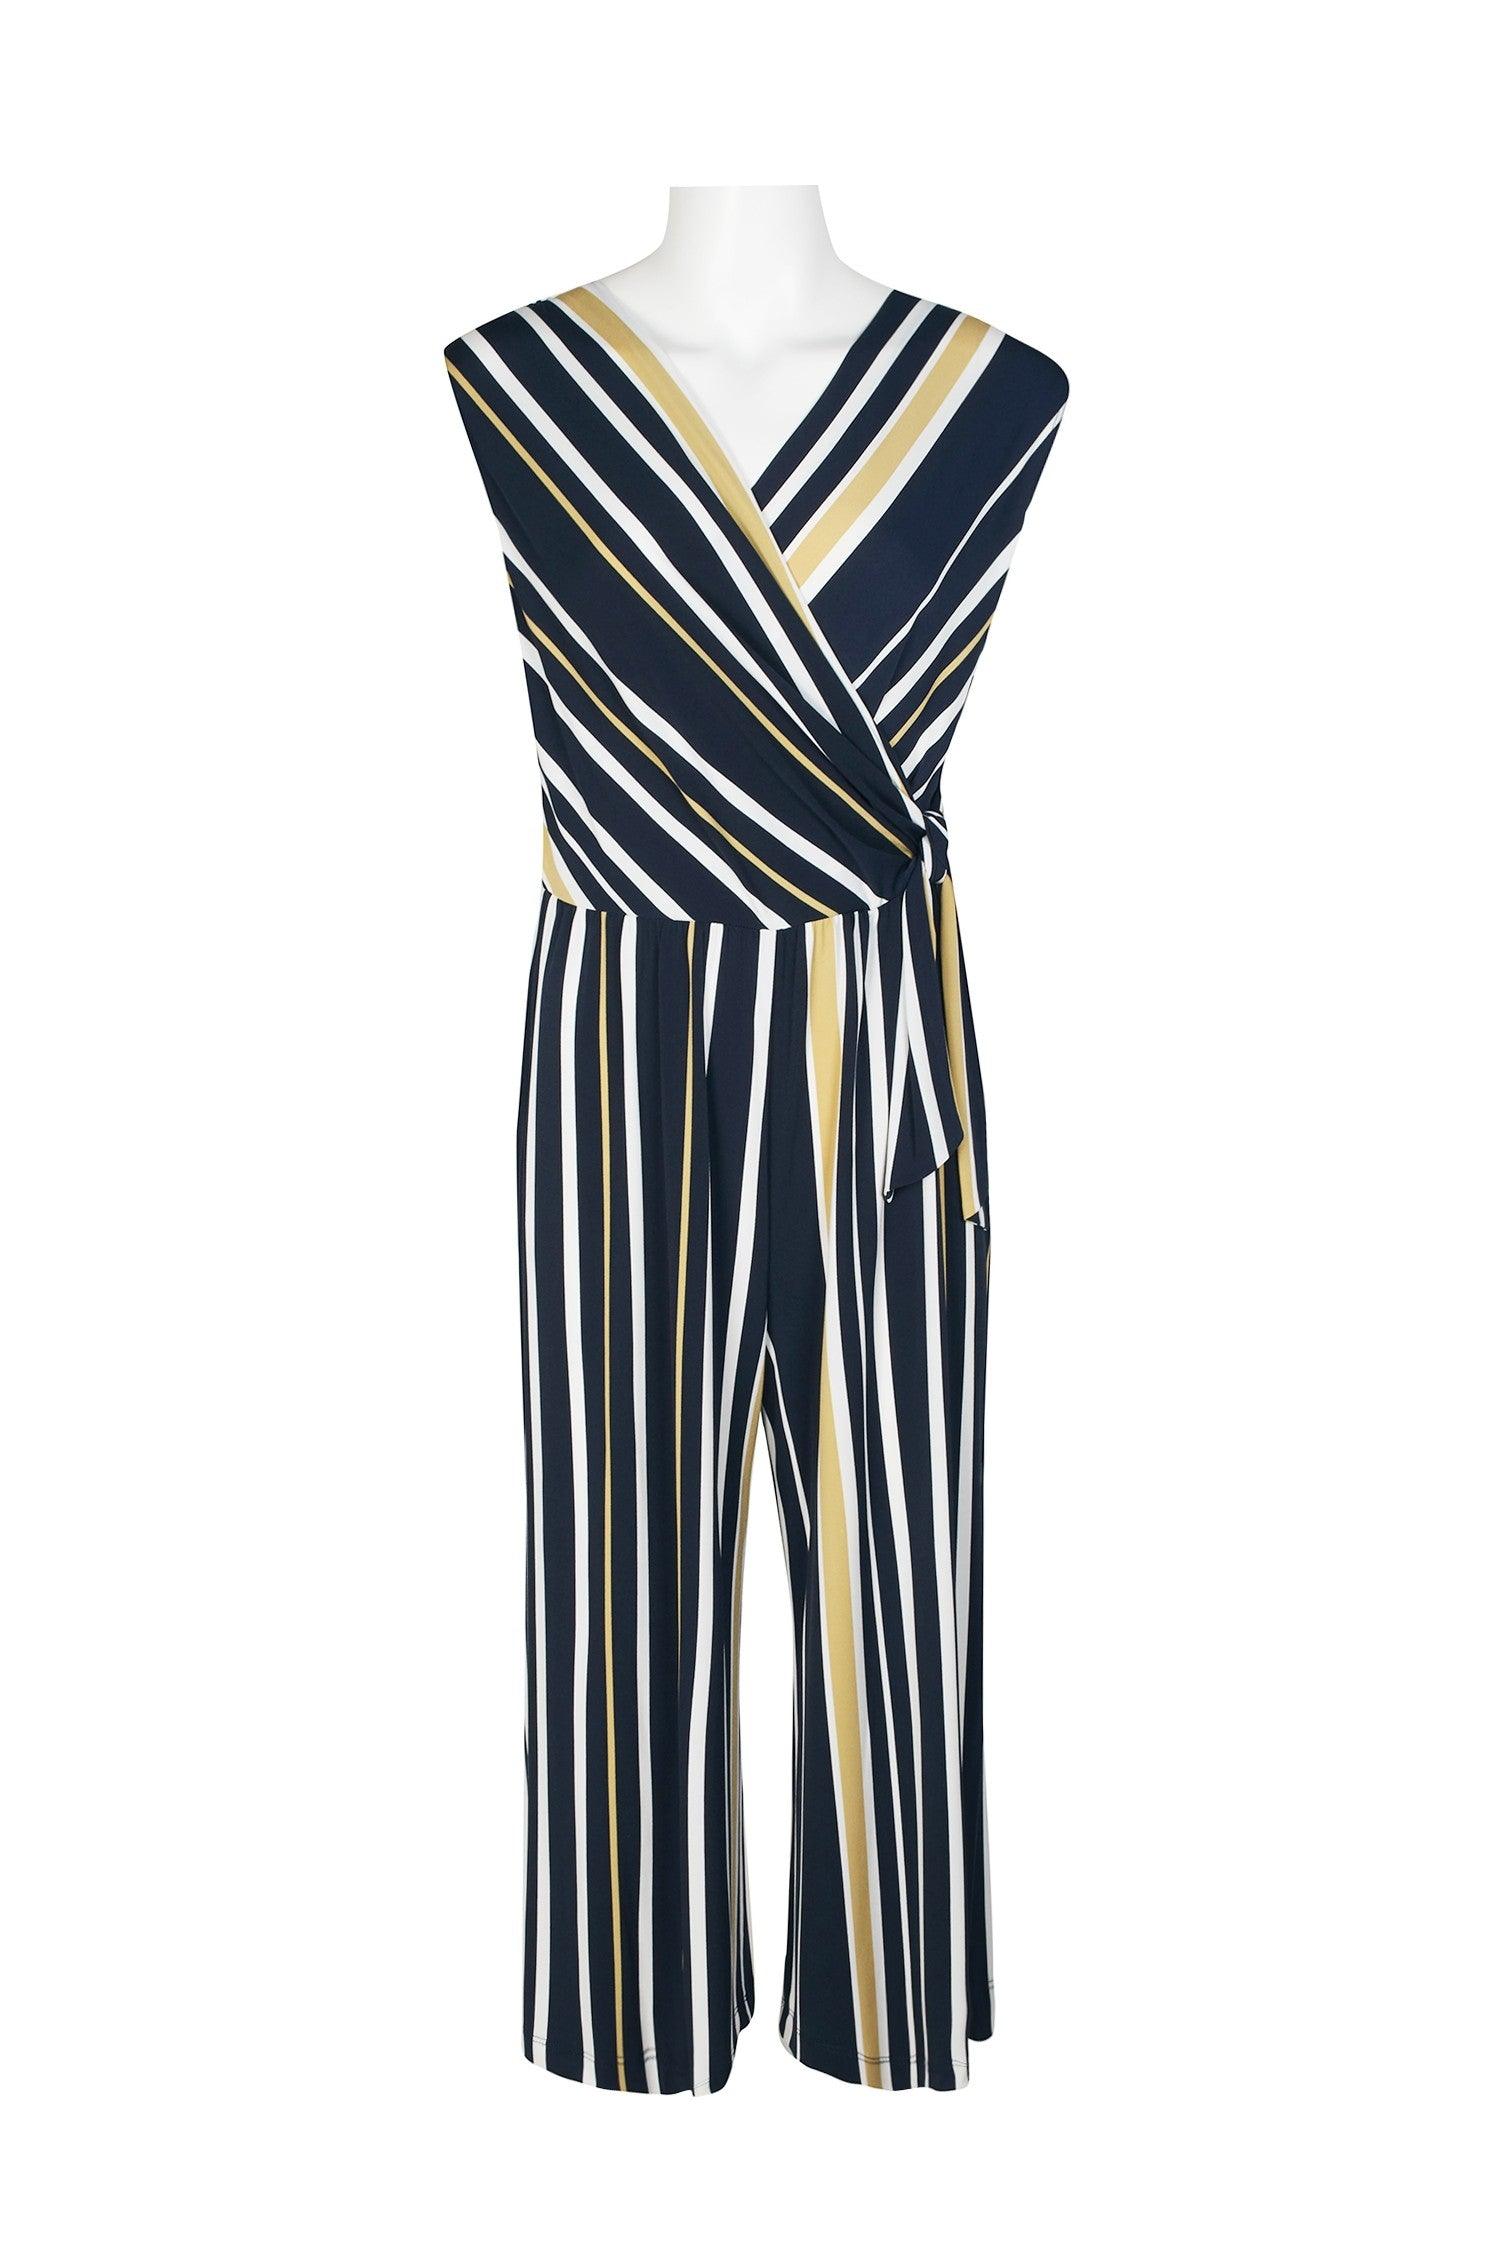 Connected Apparel Cap Sleeve Stripe Print Jumpsuit - The Dress Outlet